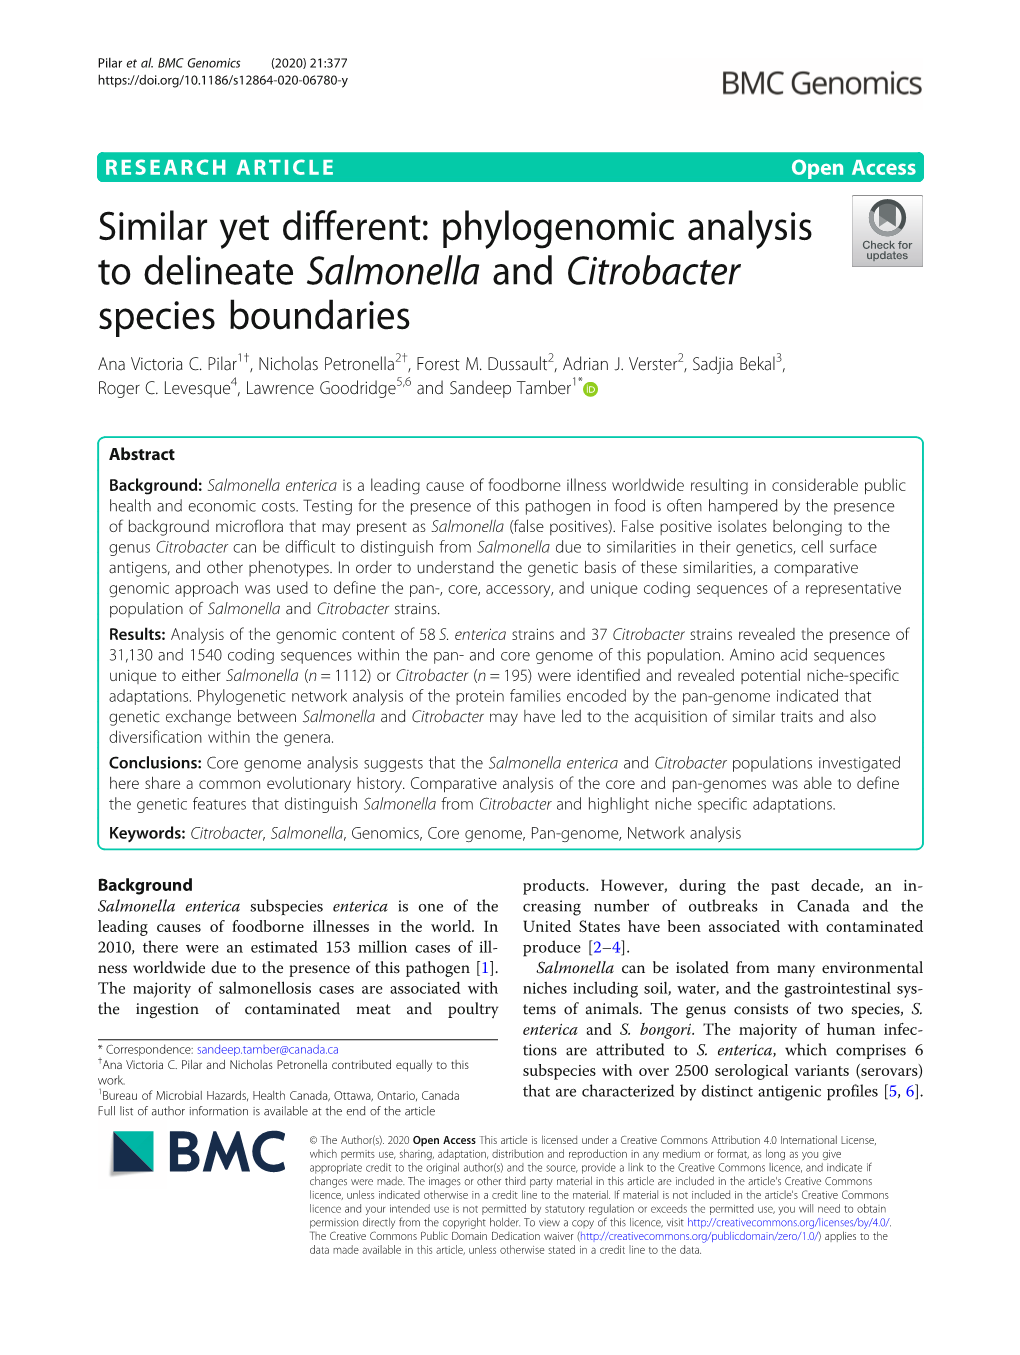 Phylogenomic Analysis to Delineate Salmonella and Citrobacter Species Boundaries Ana Victoria C